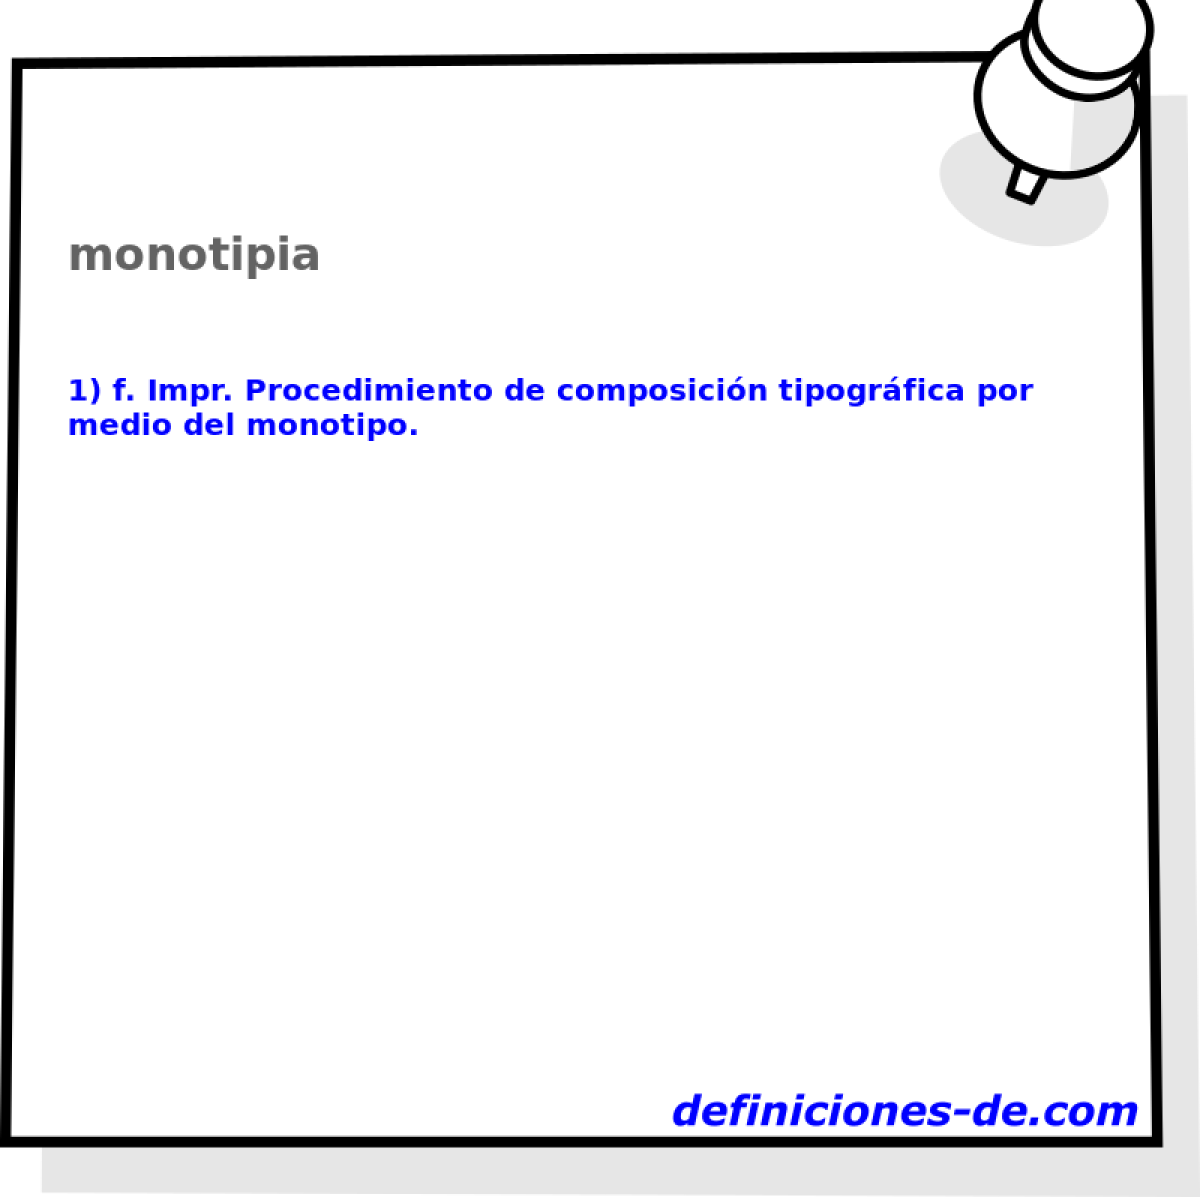 monotipia 